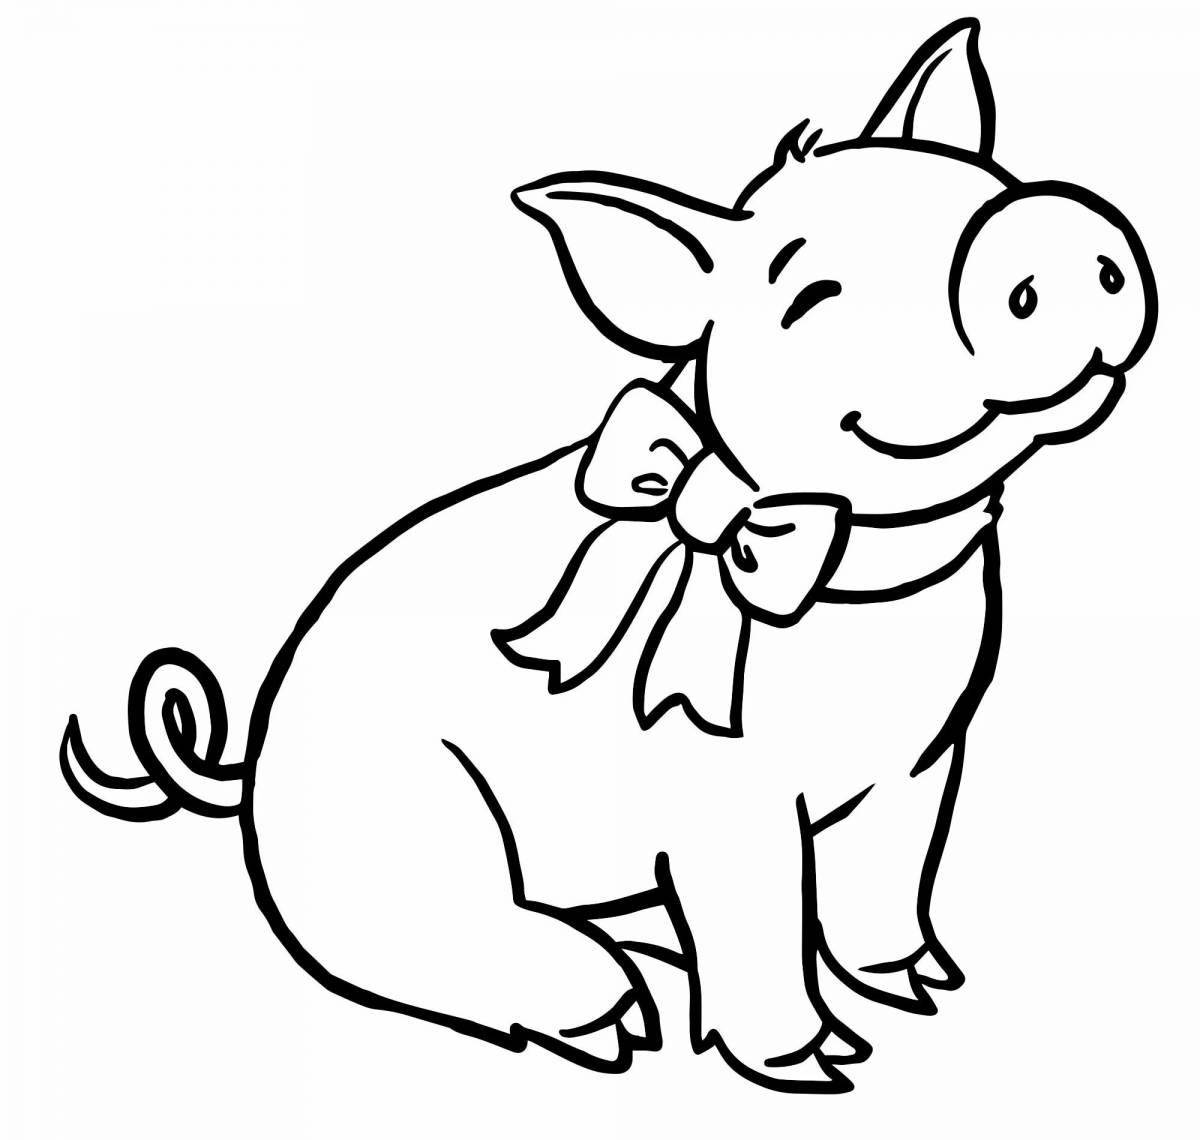 Magic coloring pig for kids